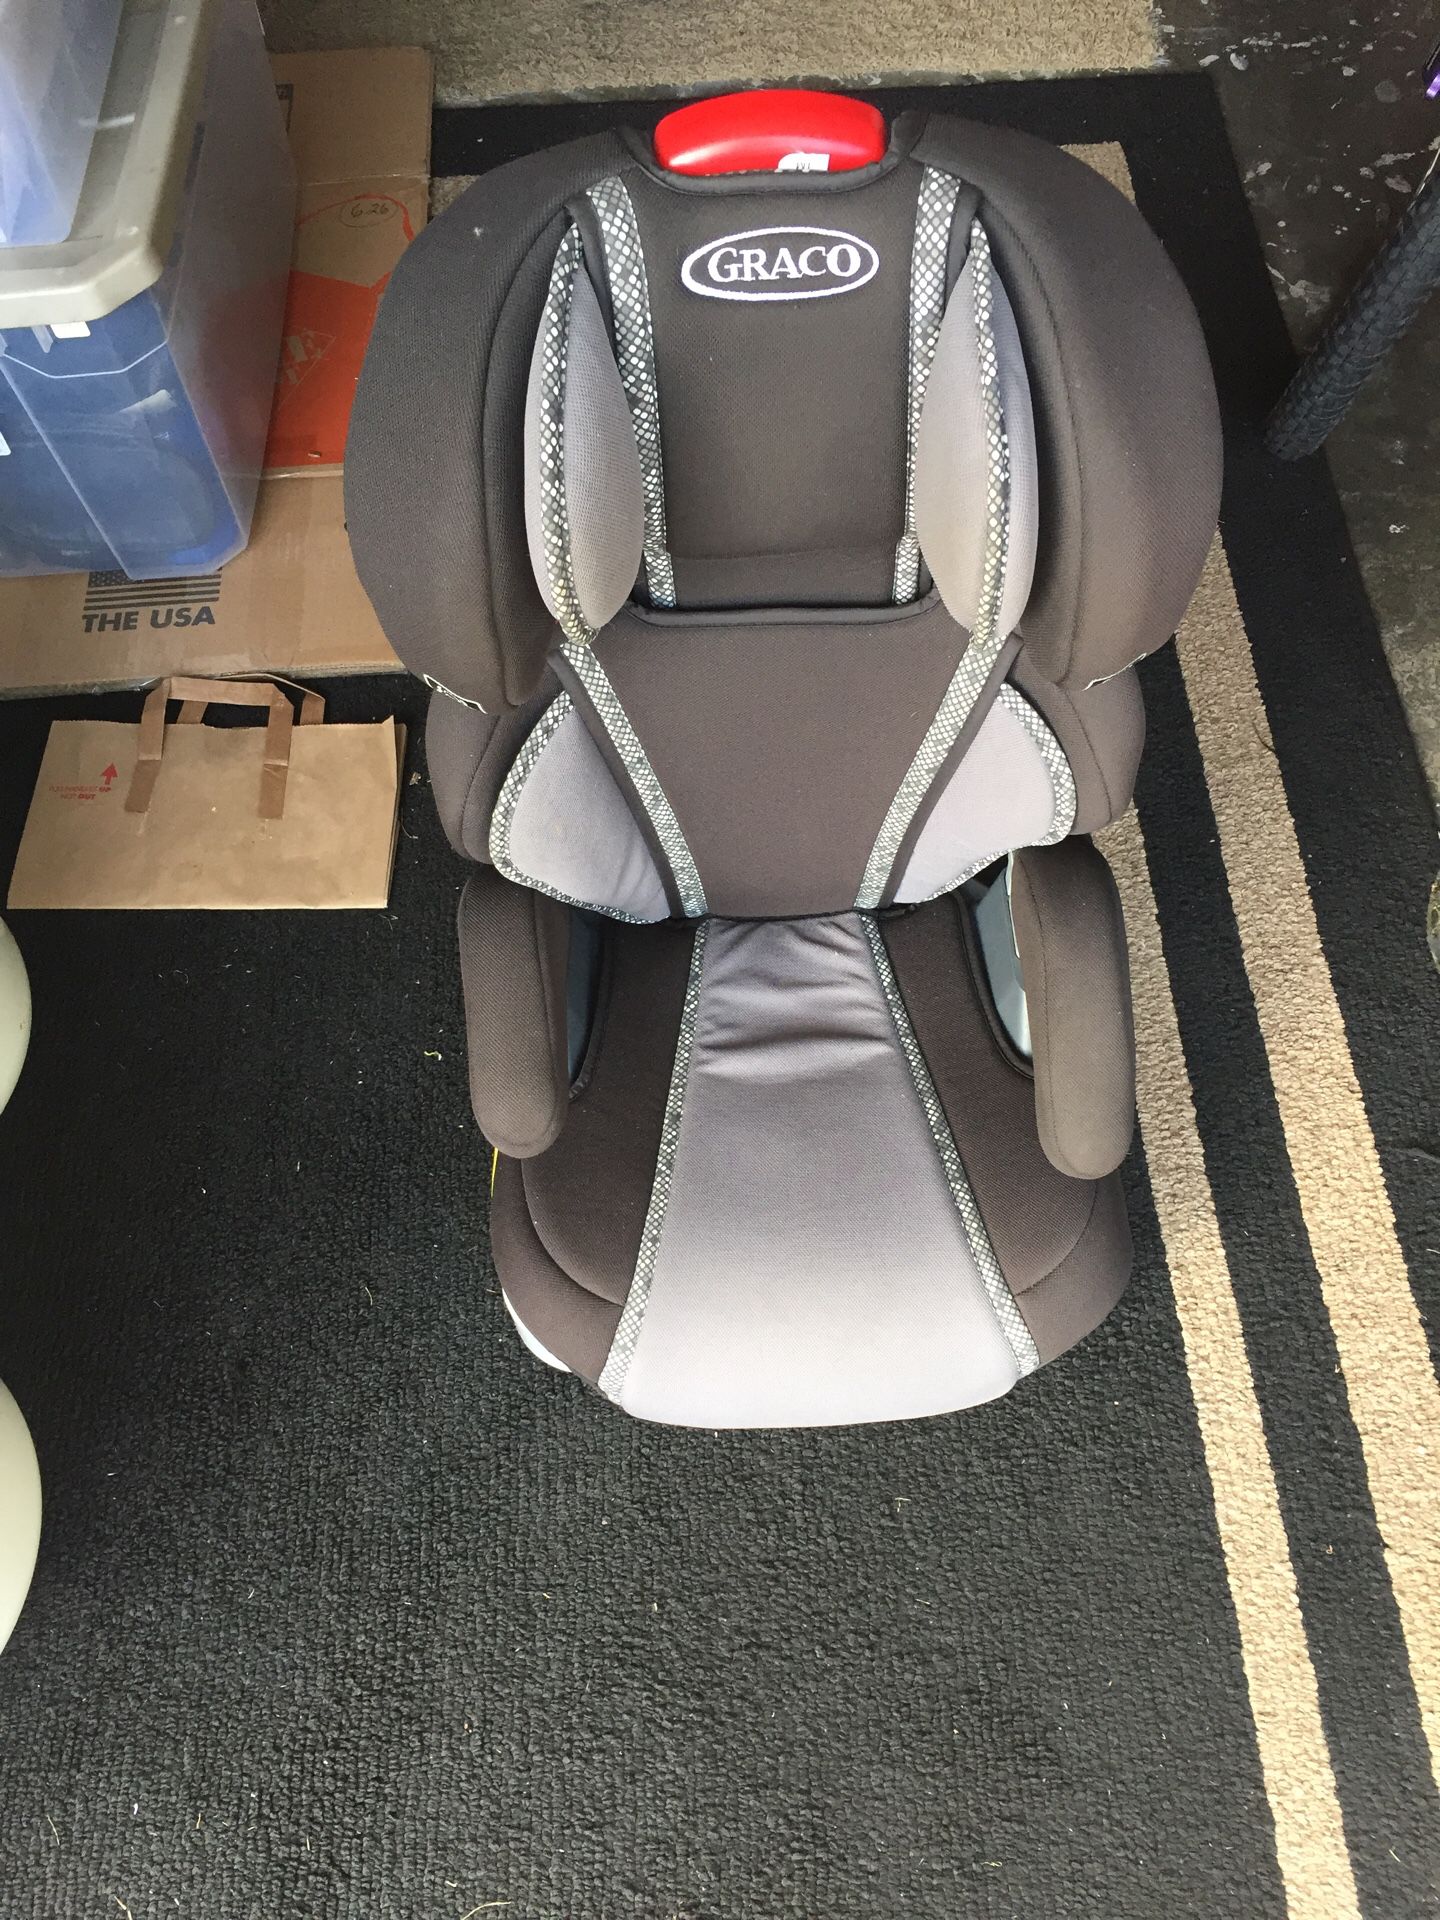 Graco child car seat